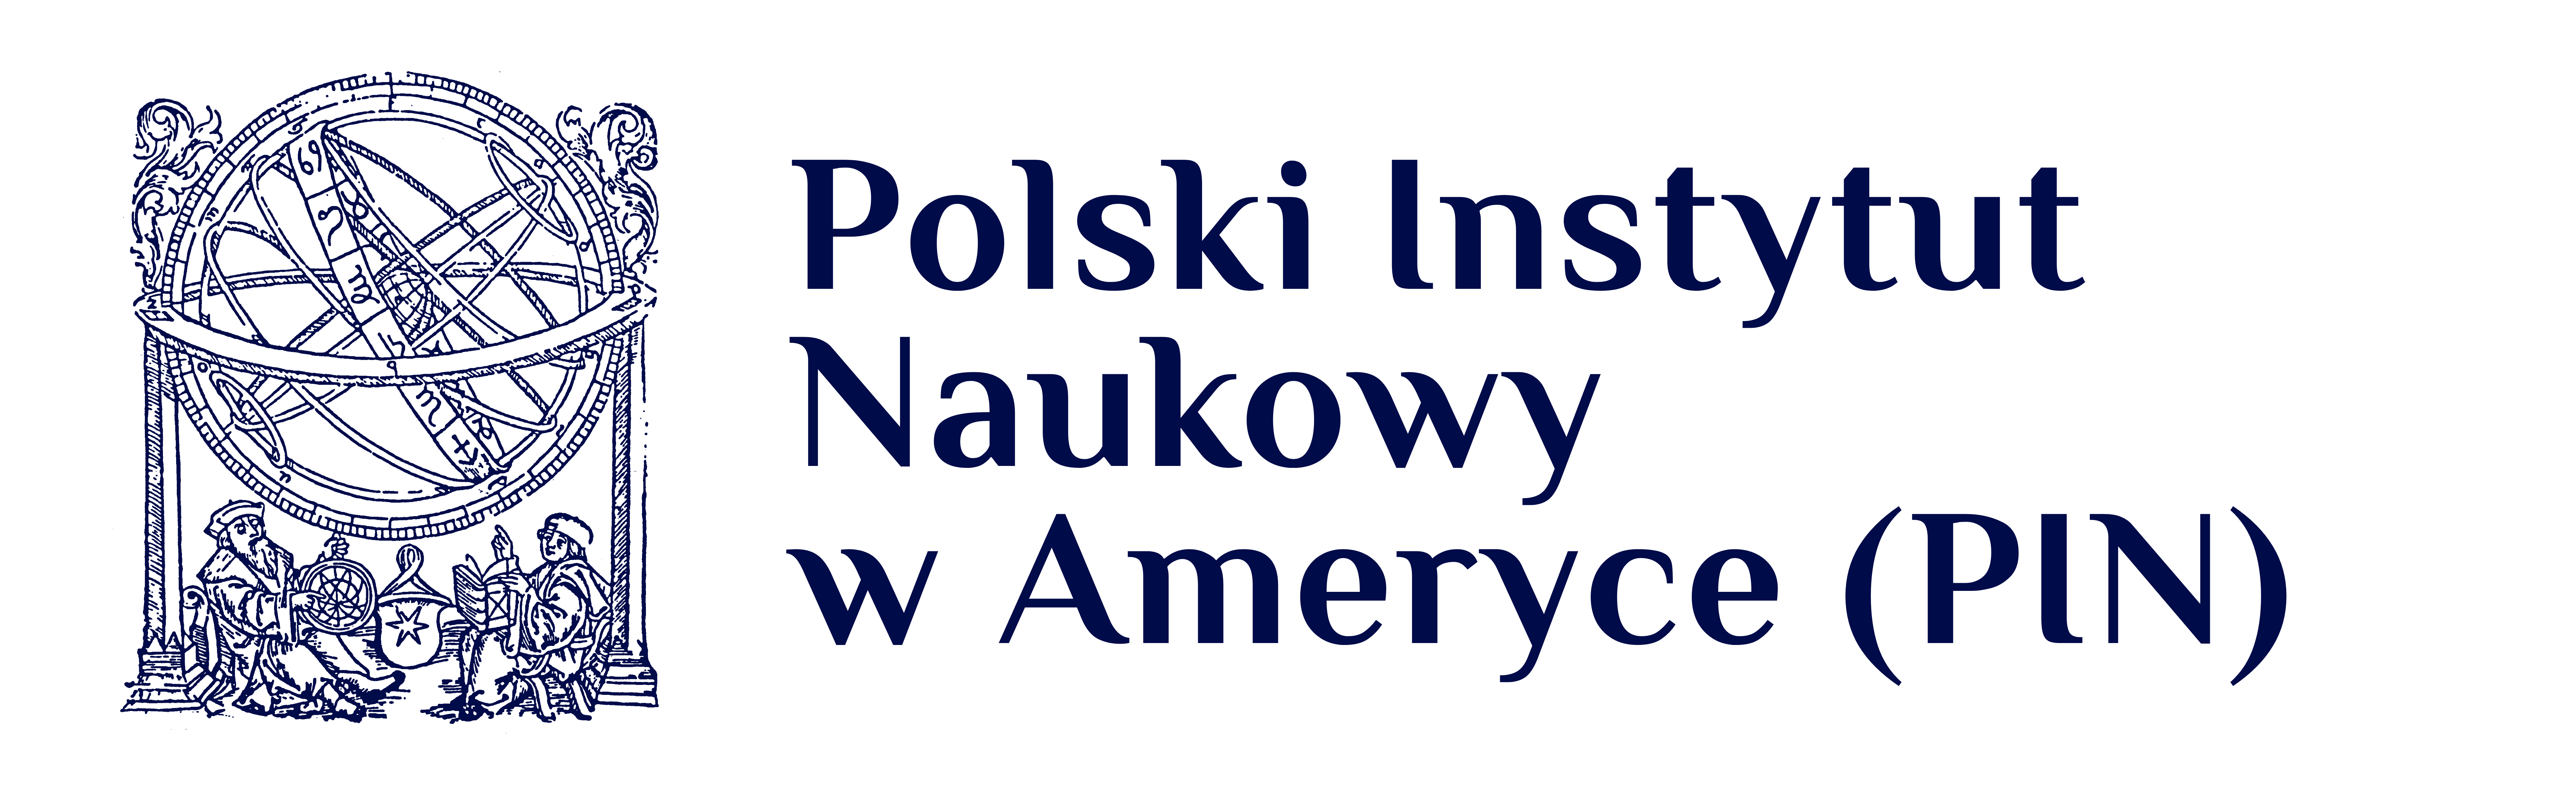 Polski Instytut Naukowy w Ameryce